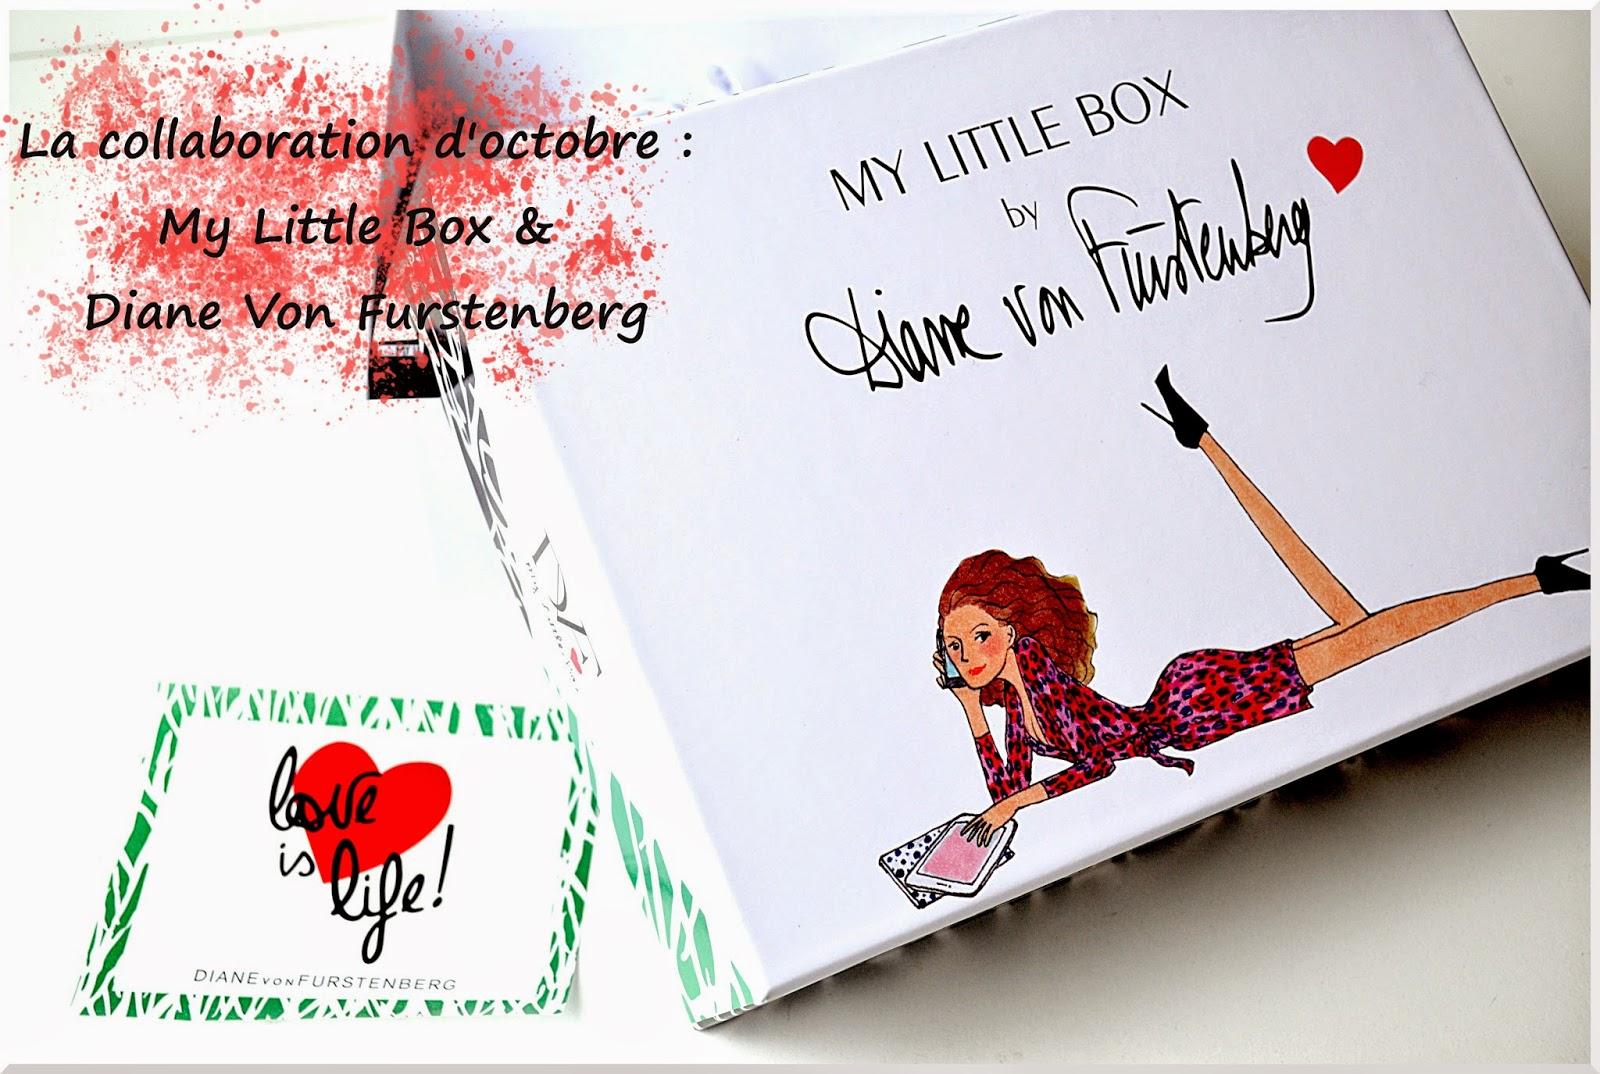 [Box] Diane Van Furstenberg s'invite dans My Little Box d'octobre !